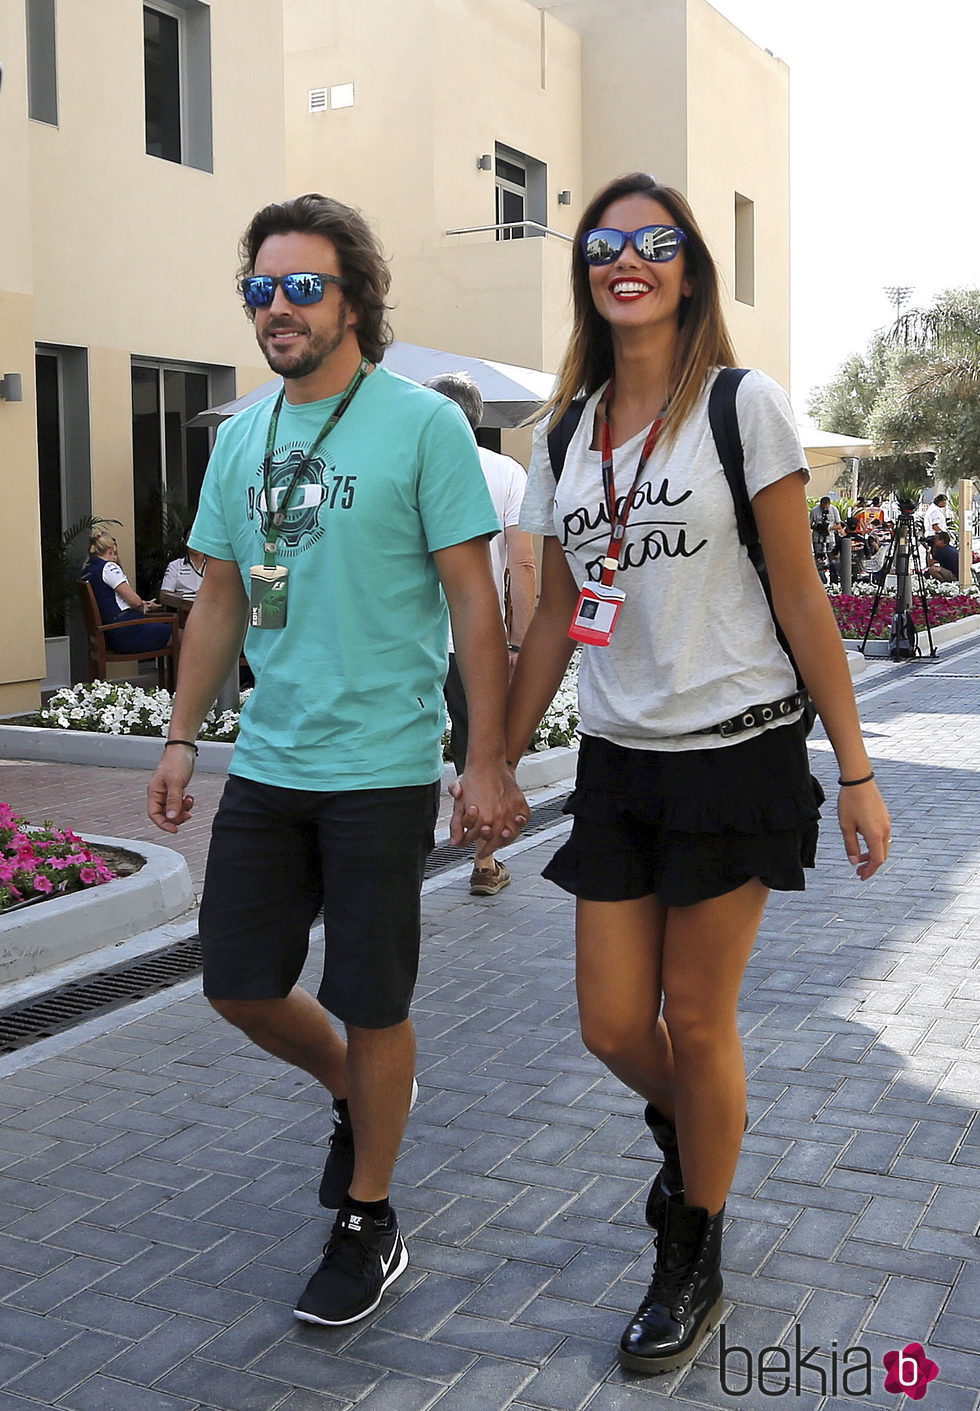 Fernando Alonso y Lara Álvarez paseando su amor por Abu Dhabi